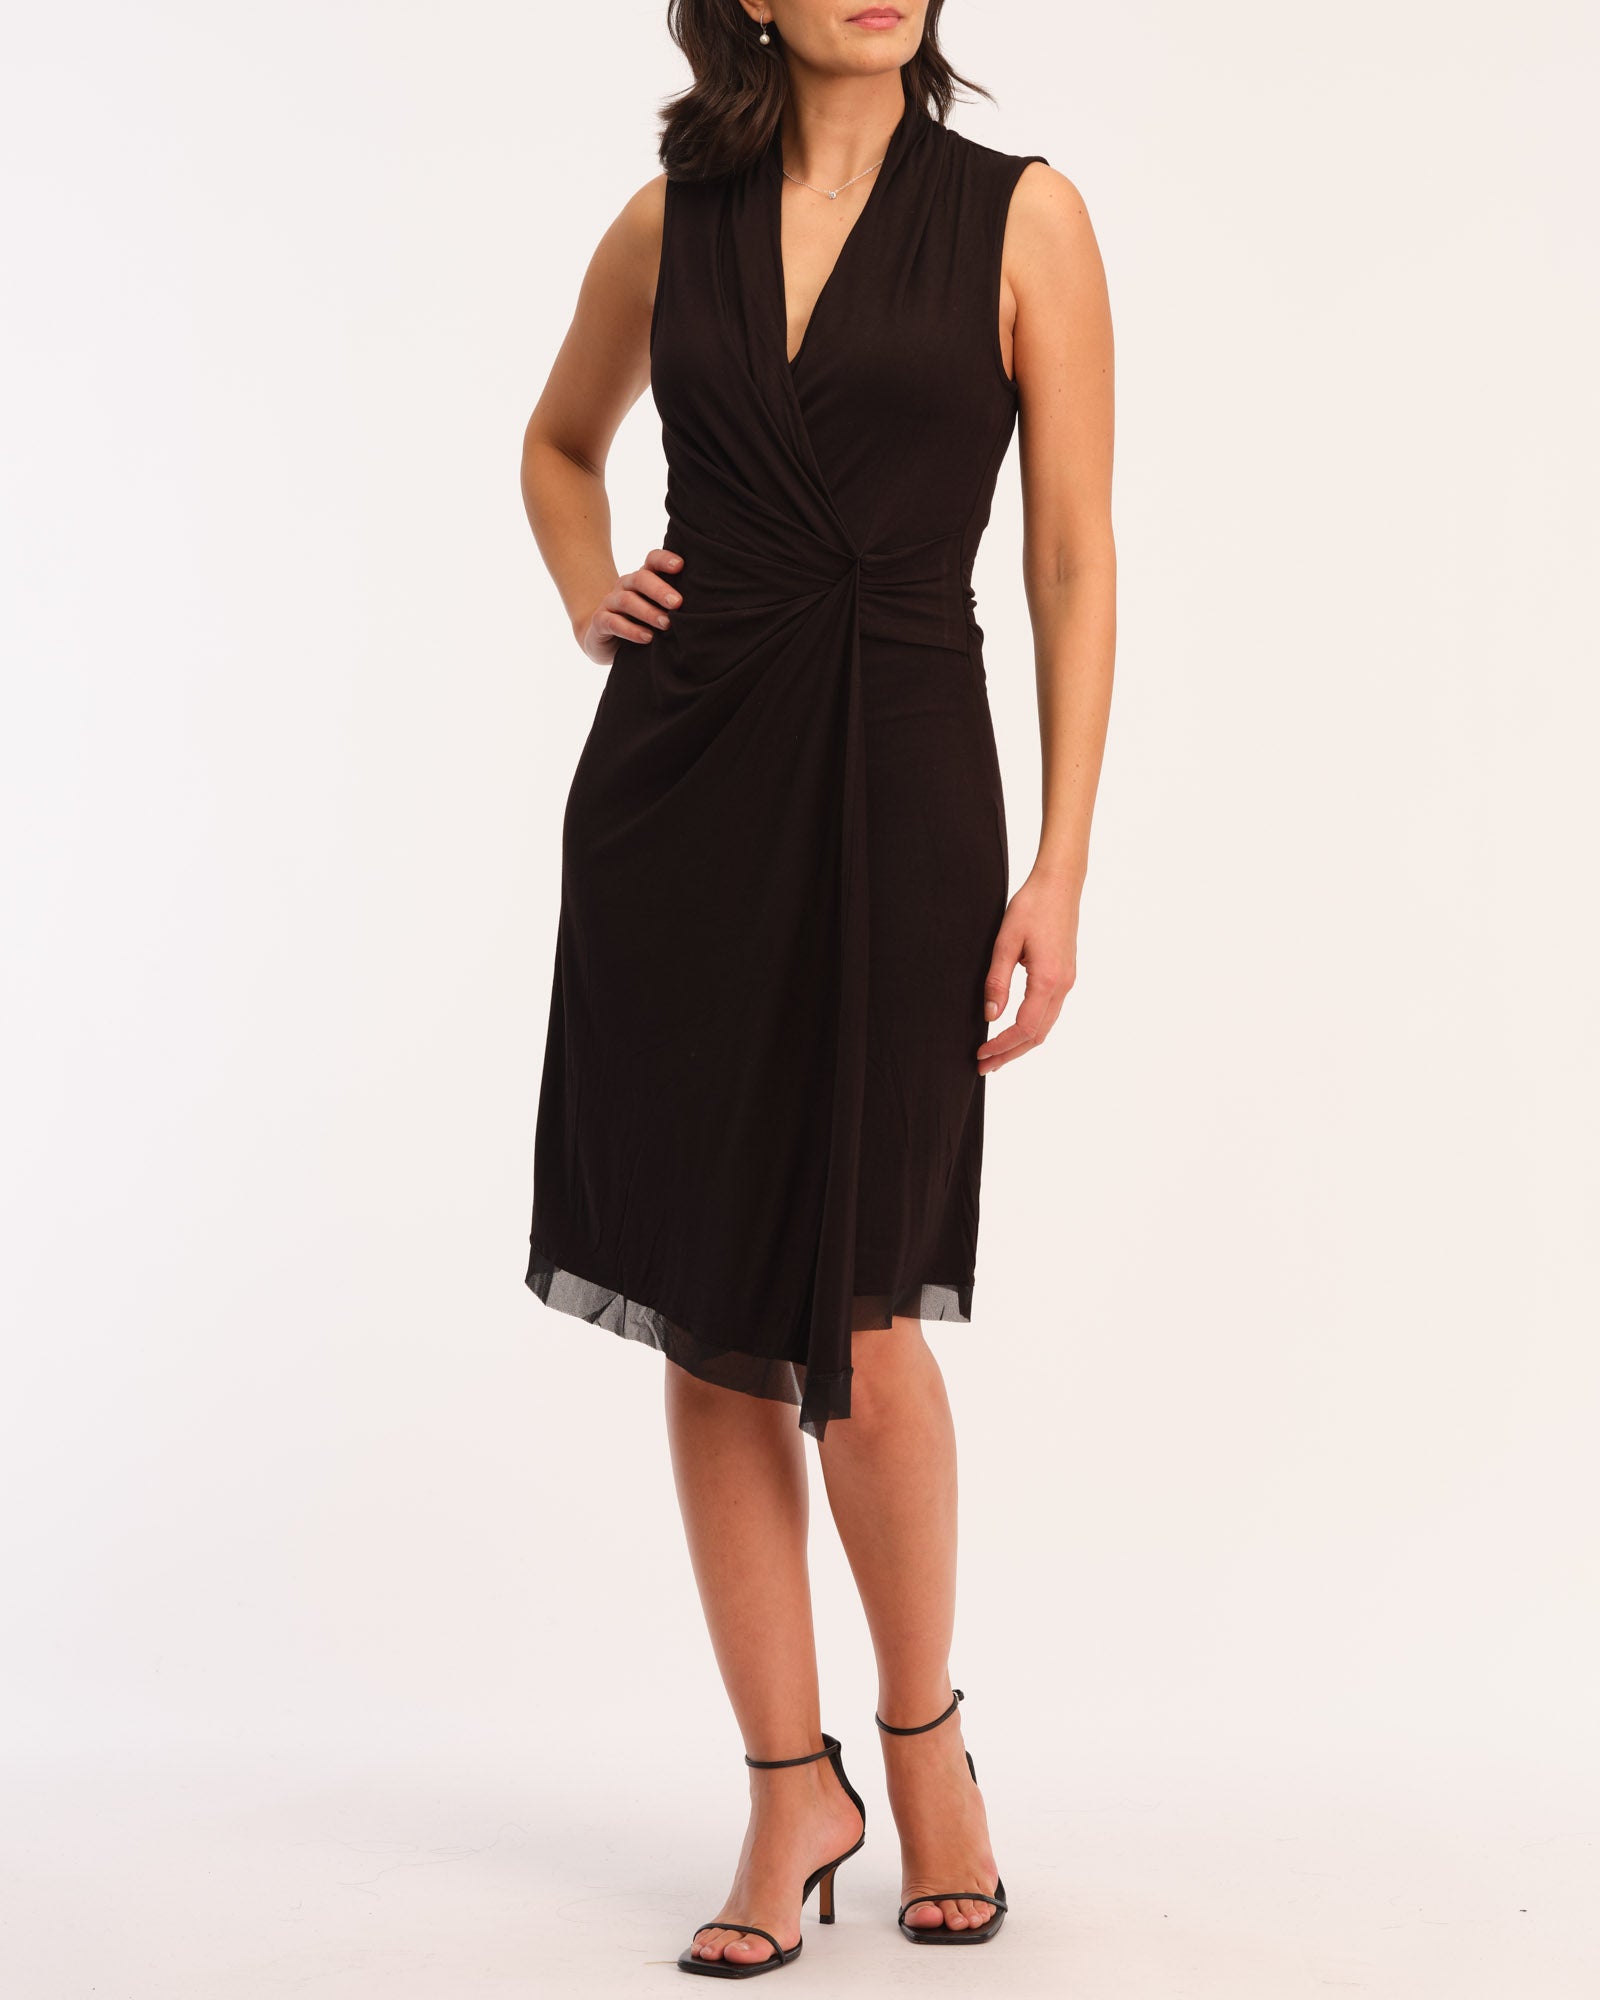 Shop Elie Elie Tahari Women's Twist Front Jersey Dress | JANE + MERCER